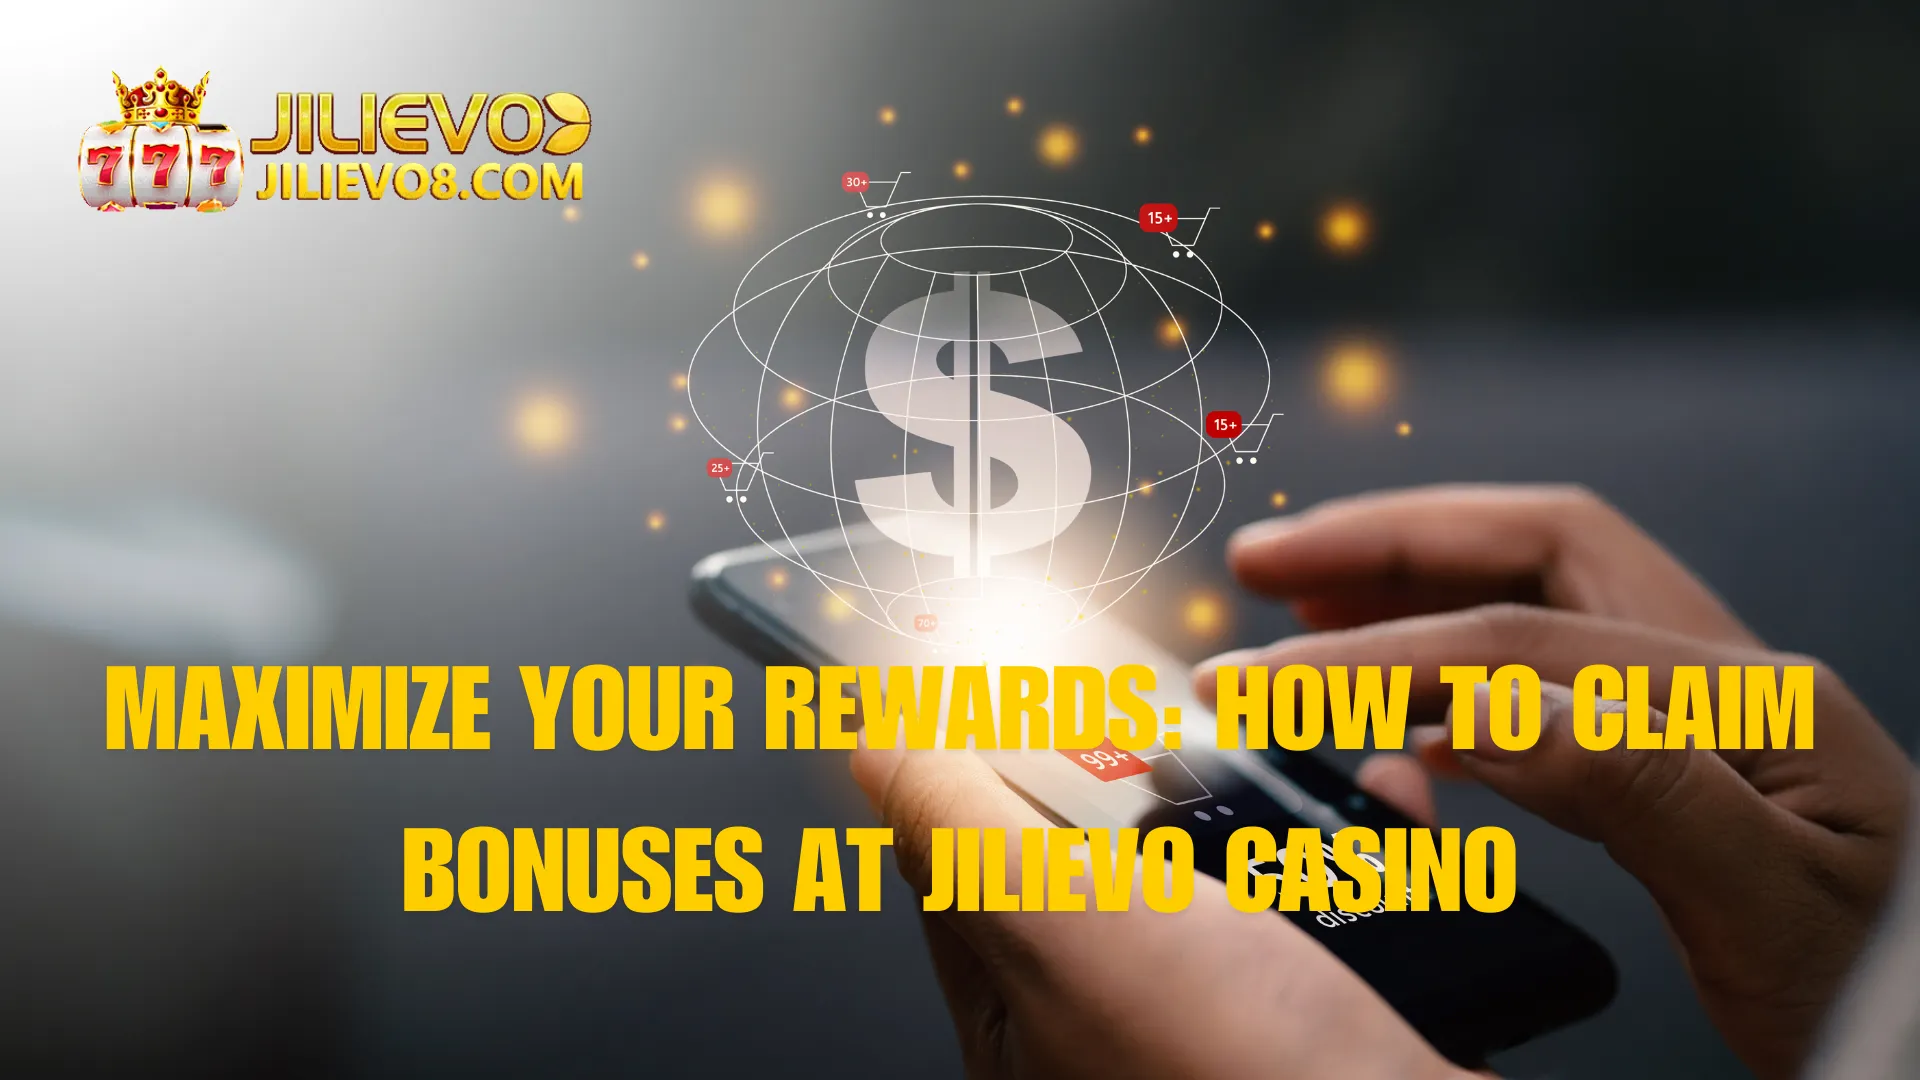 Maximizing Bonuses at Jilievo Casino